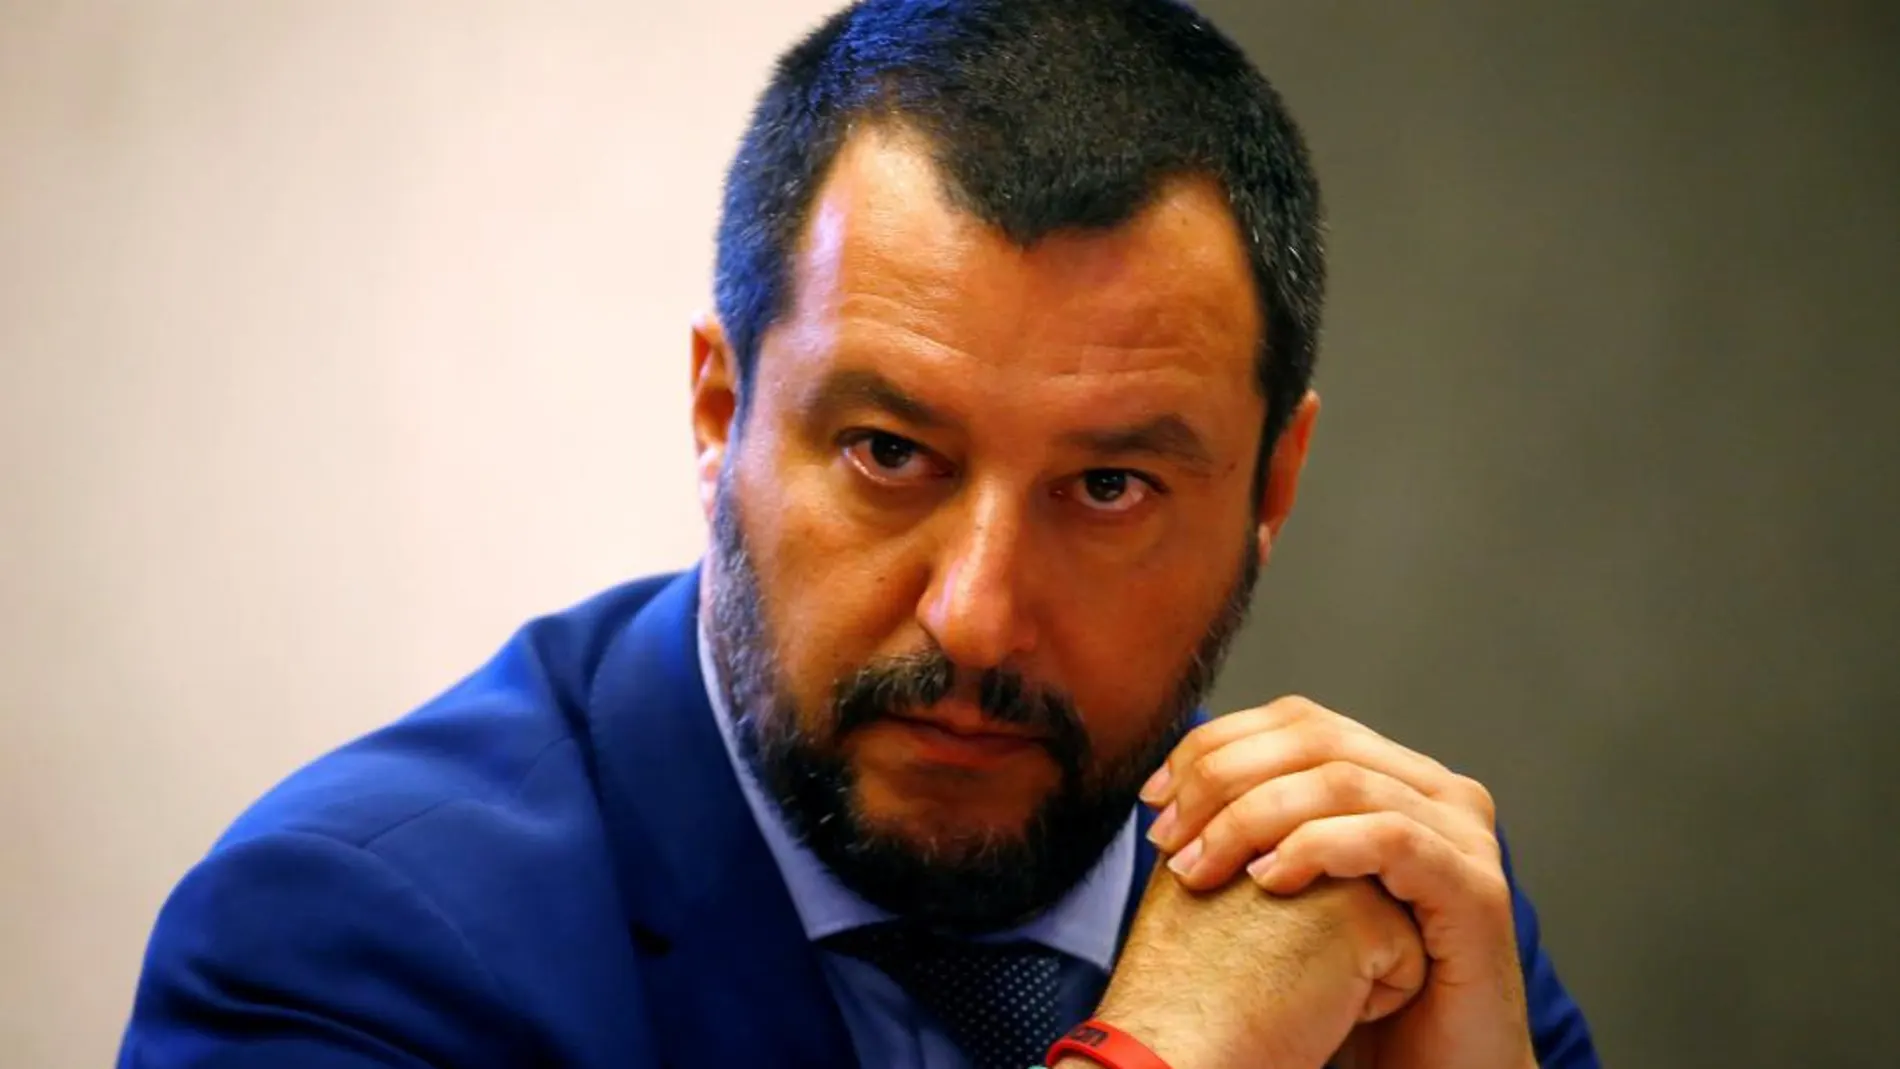 El ministro del Interior de Italia, Matteo Salvini/Foto: Ap